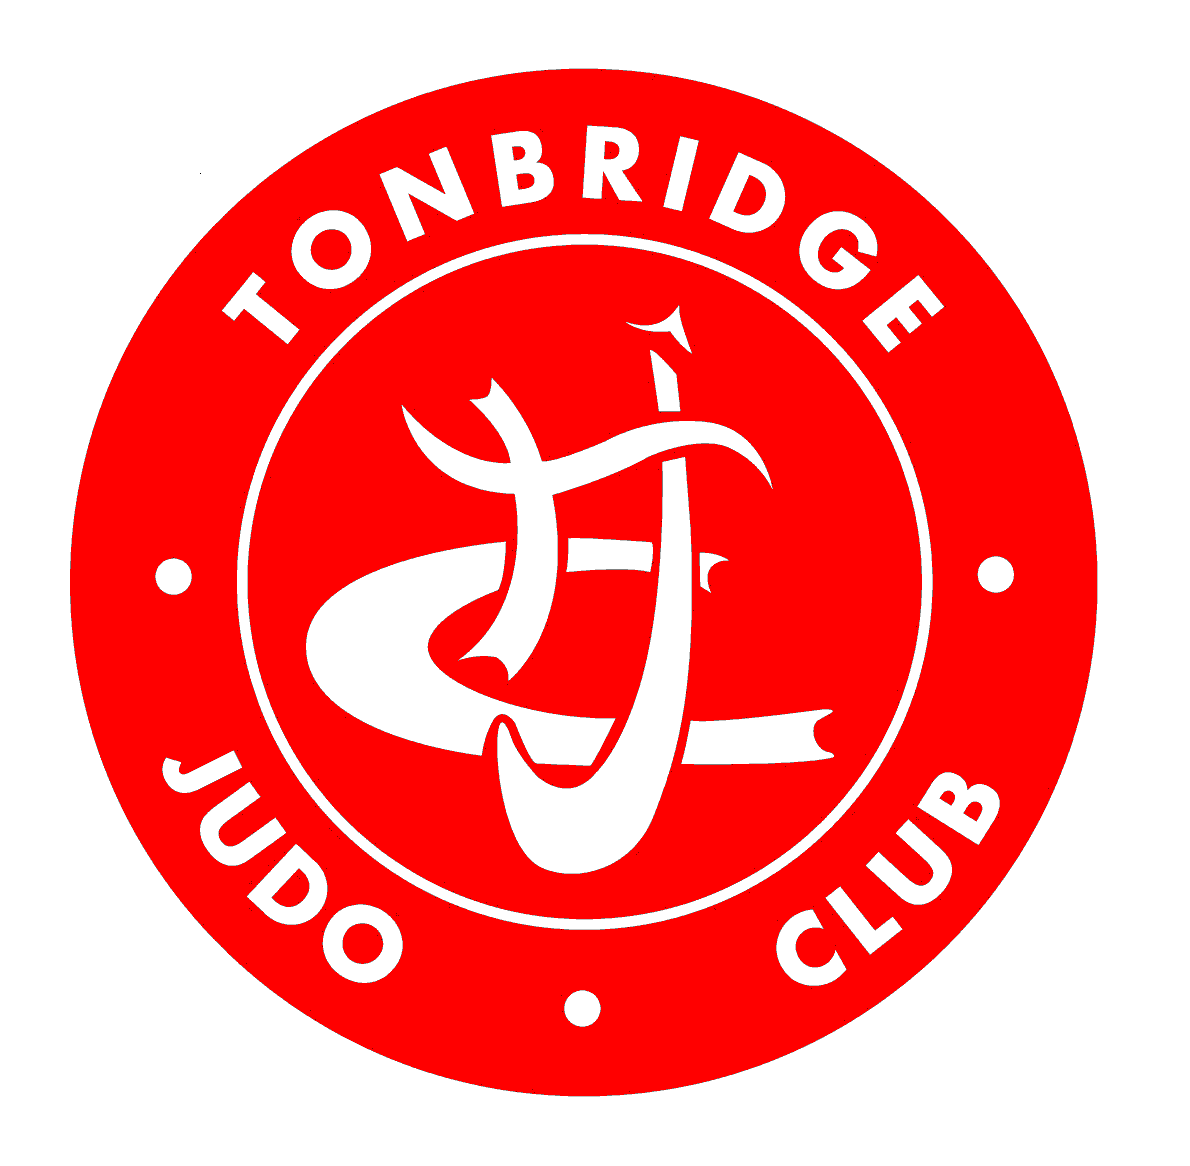 Tonbridge Judo Club